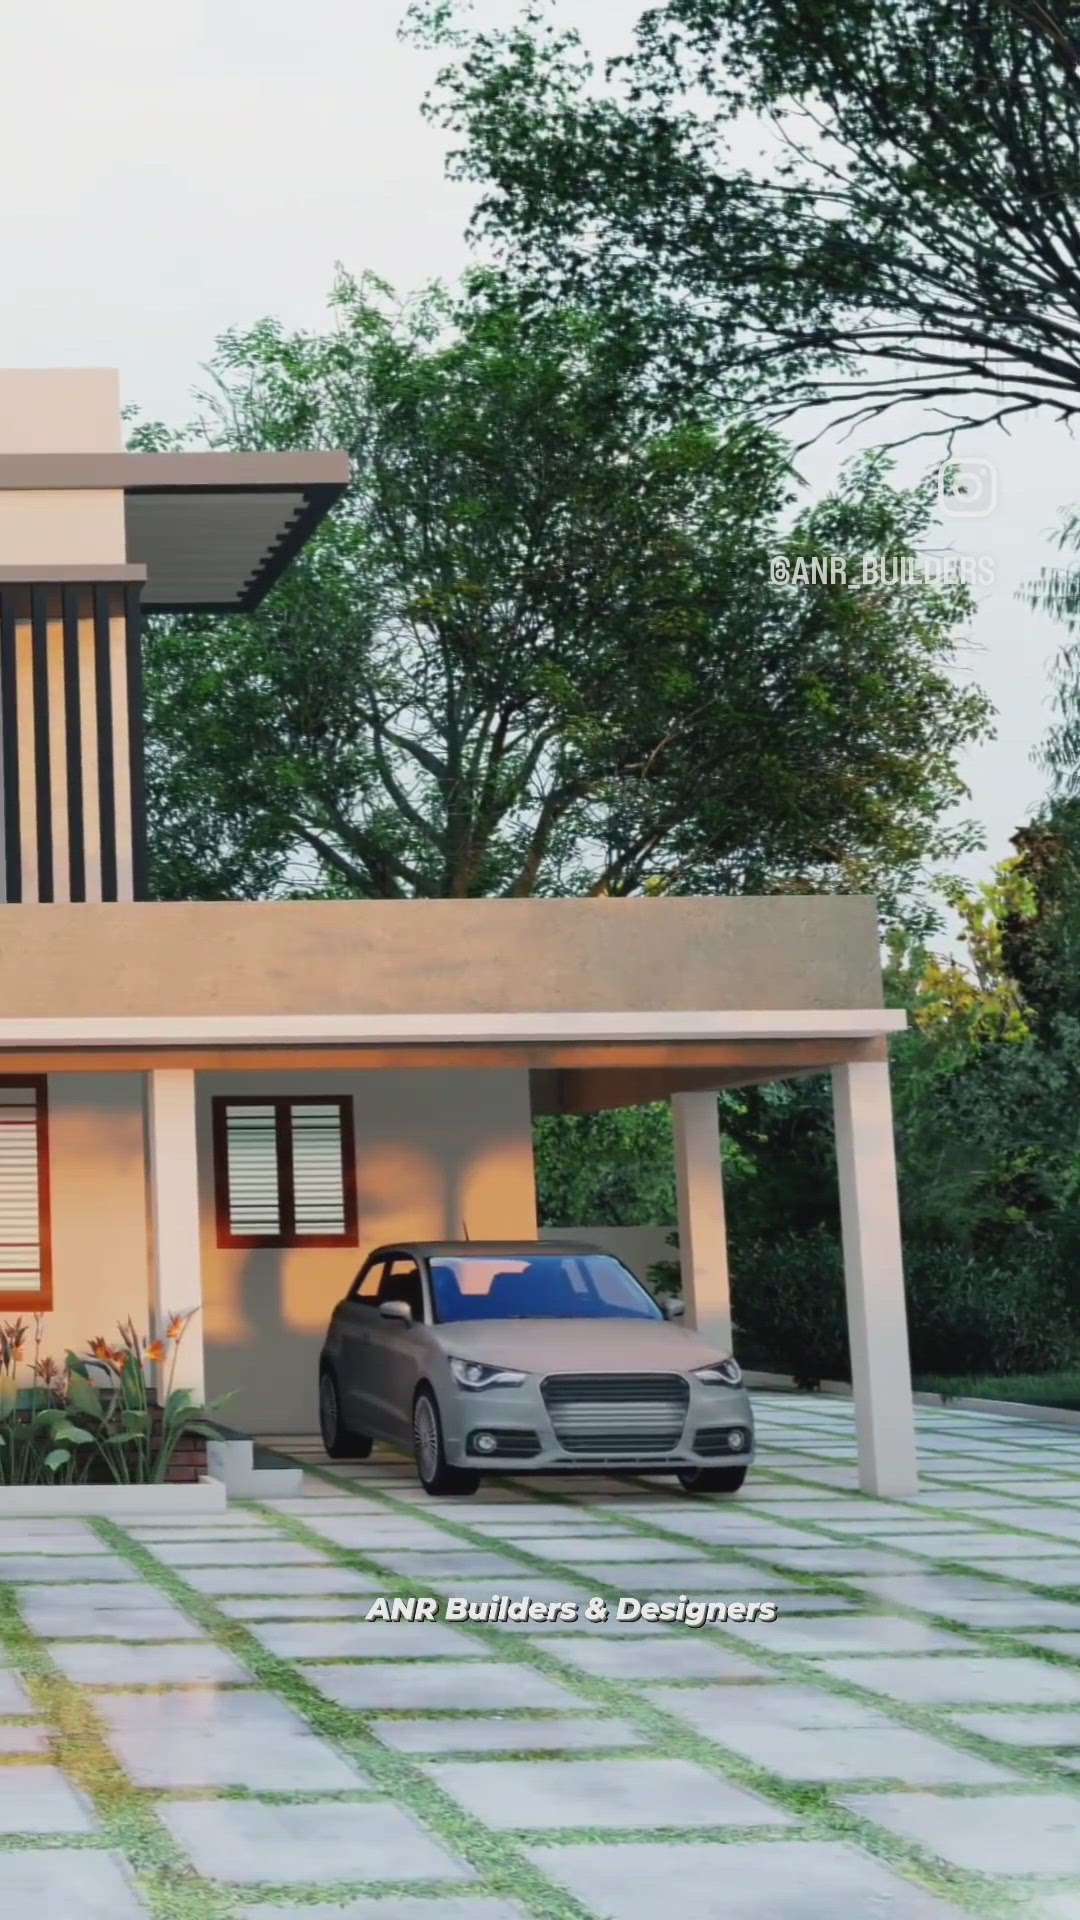 ᴄᴏɴᴛᴇᴍᴘᴏʀᴀʀʏ ʜᴏᴍᴇ 3ᴅ ᴅᴇꜱɪɢɴ🏠
Our Completed Residential Project Design 
@anr_builders
www.anrbuilders.in
 #KeralaStyleHouse  #ElevationHome  #3d  #3DPlans #koloapp #Kollam  #kollamdesigner #homedesigne